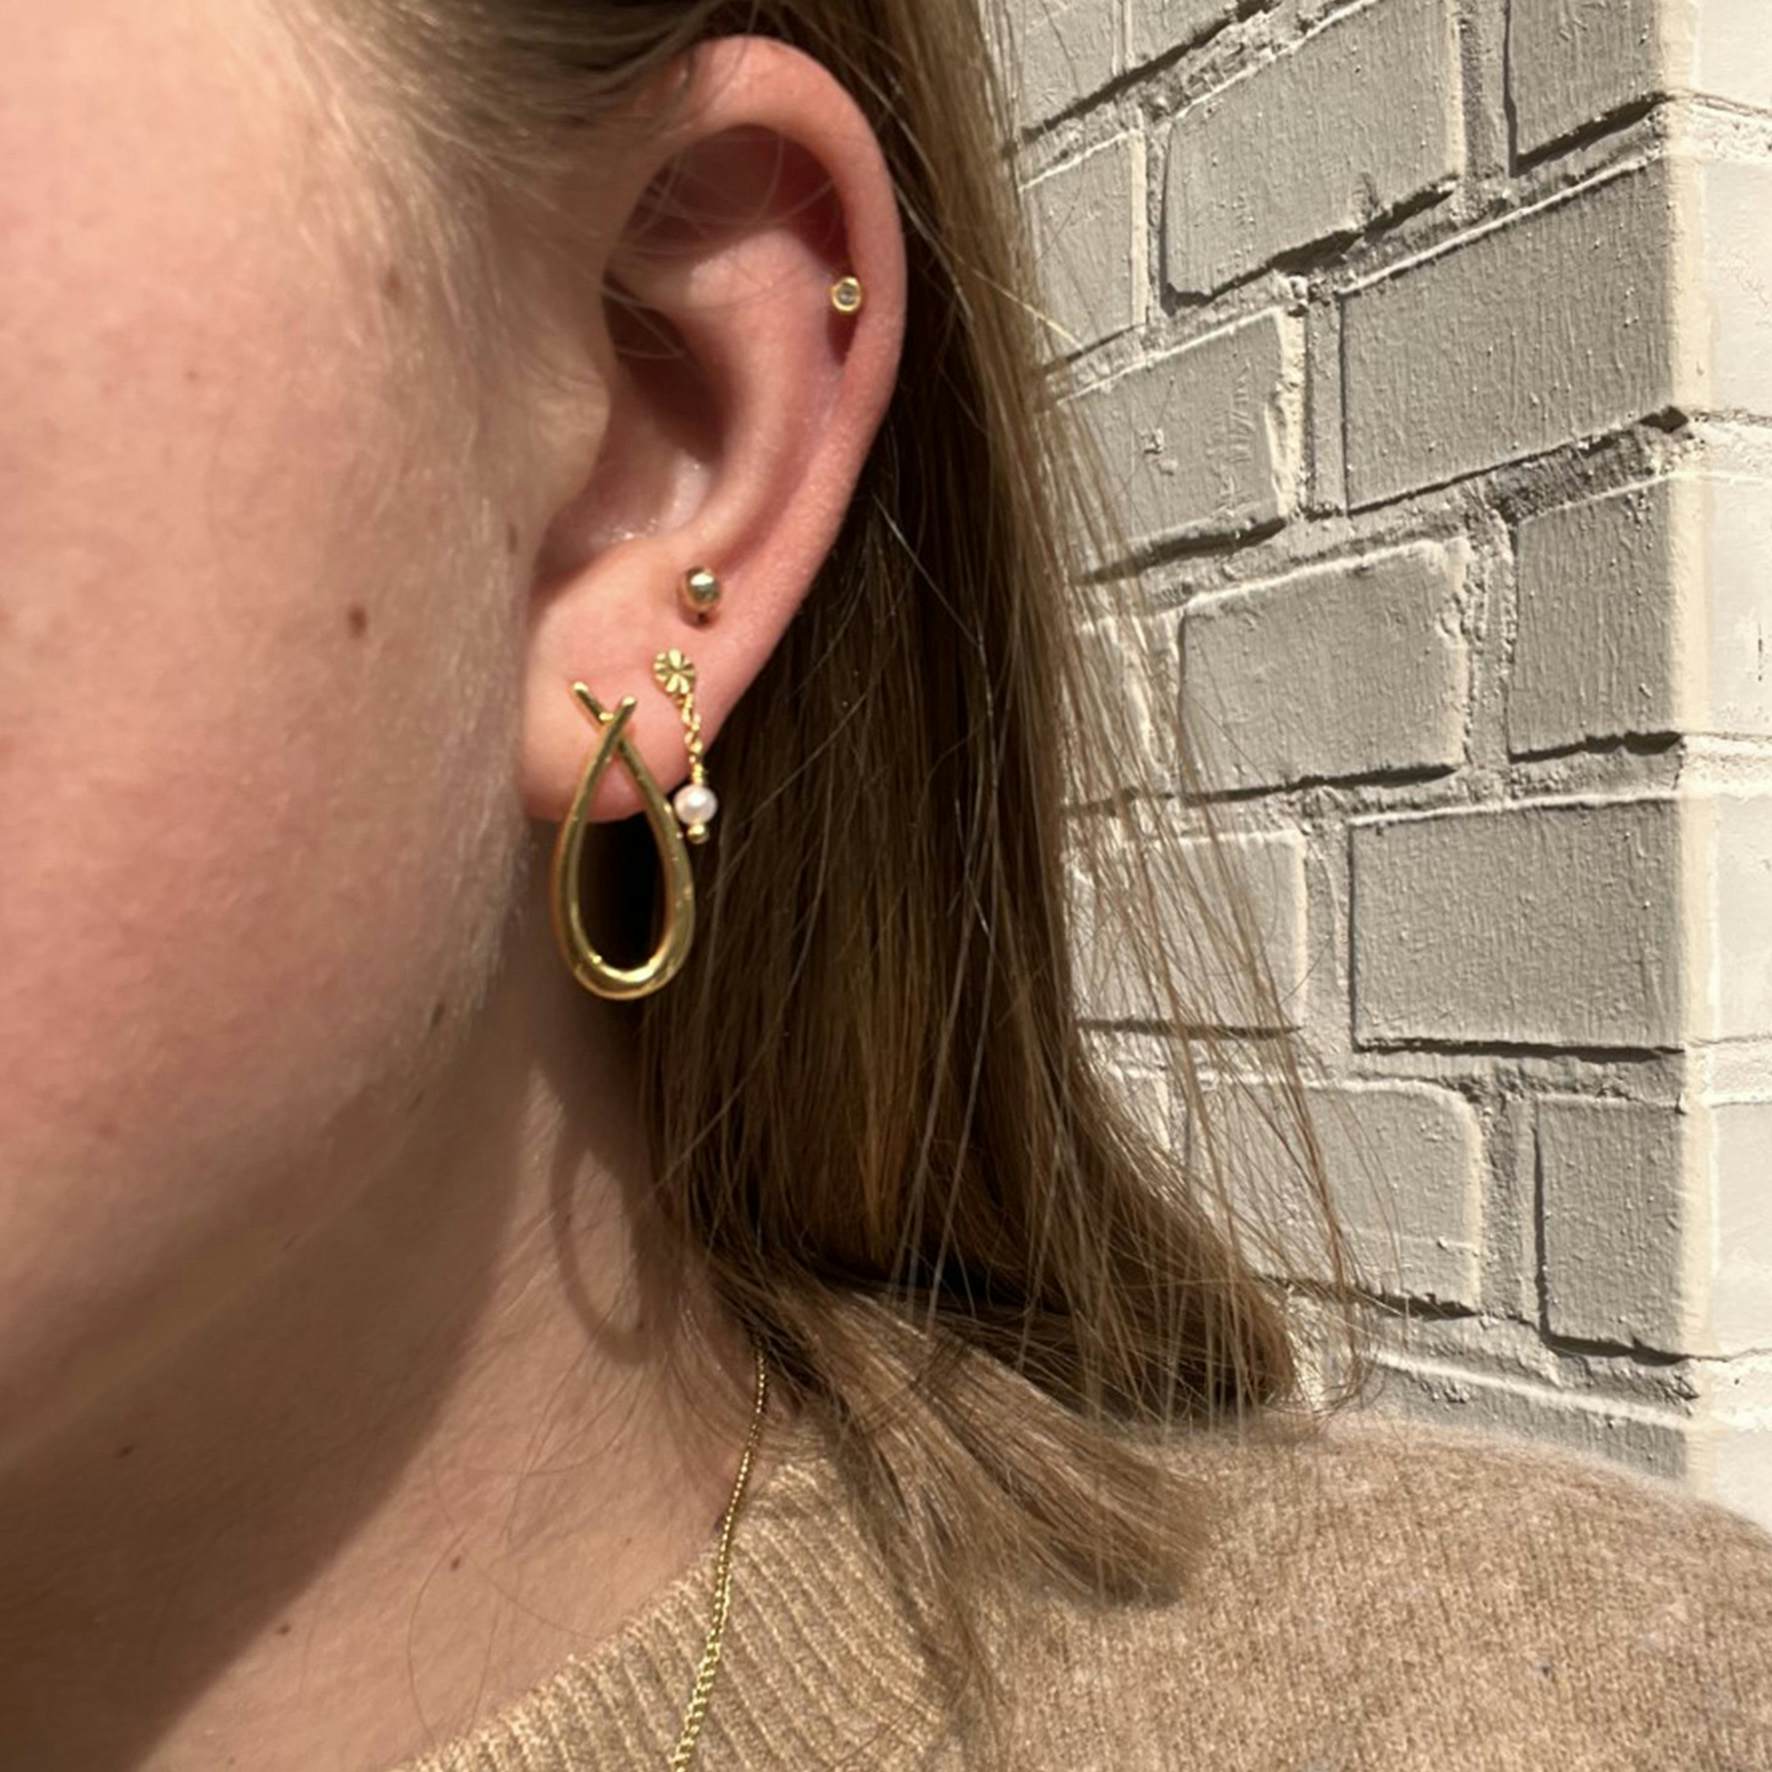 Attitude Medium earrings von Izabel Camille in Silber Sterling 925